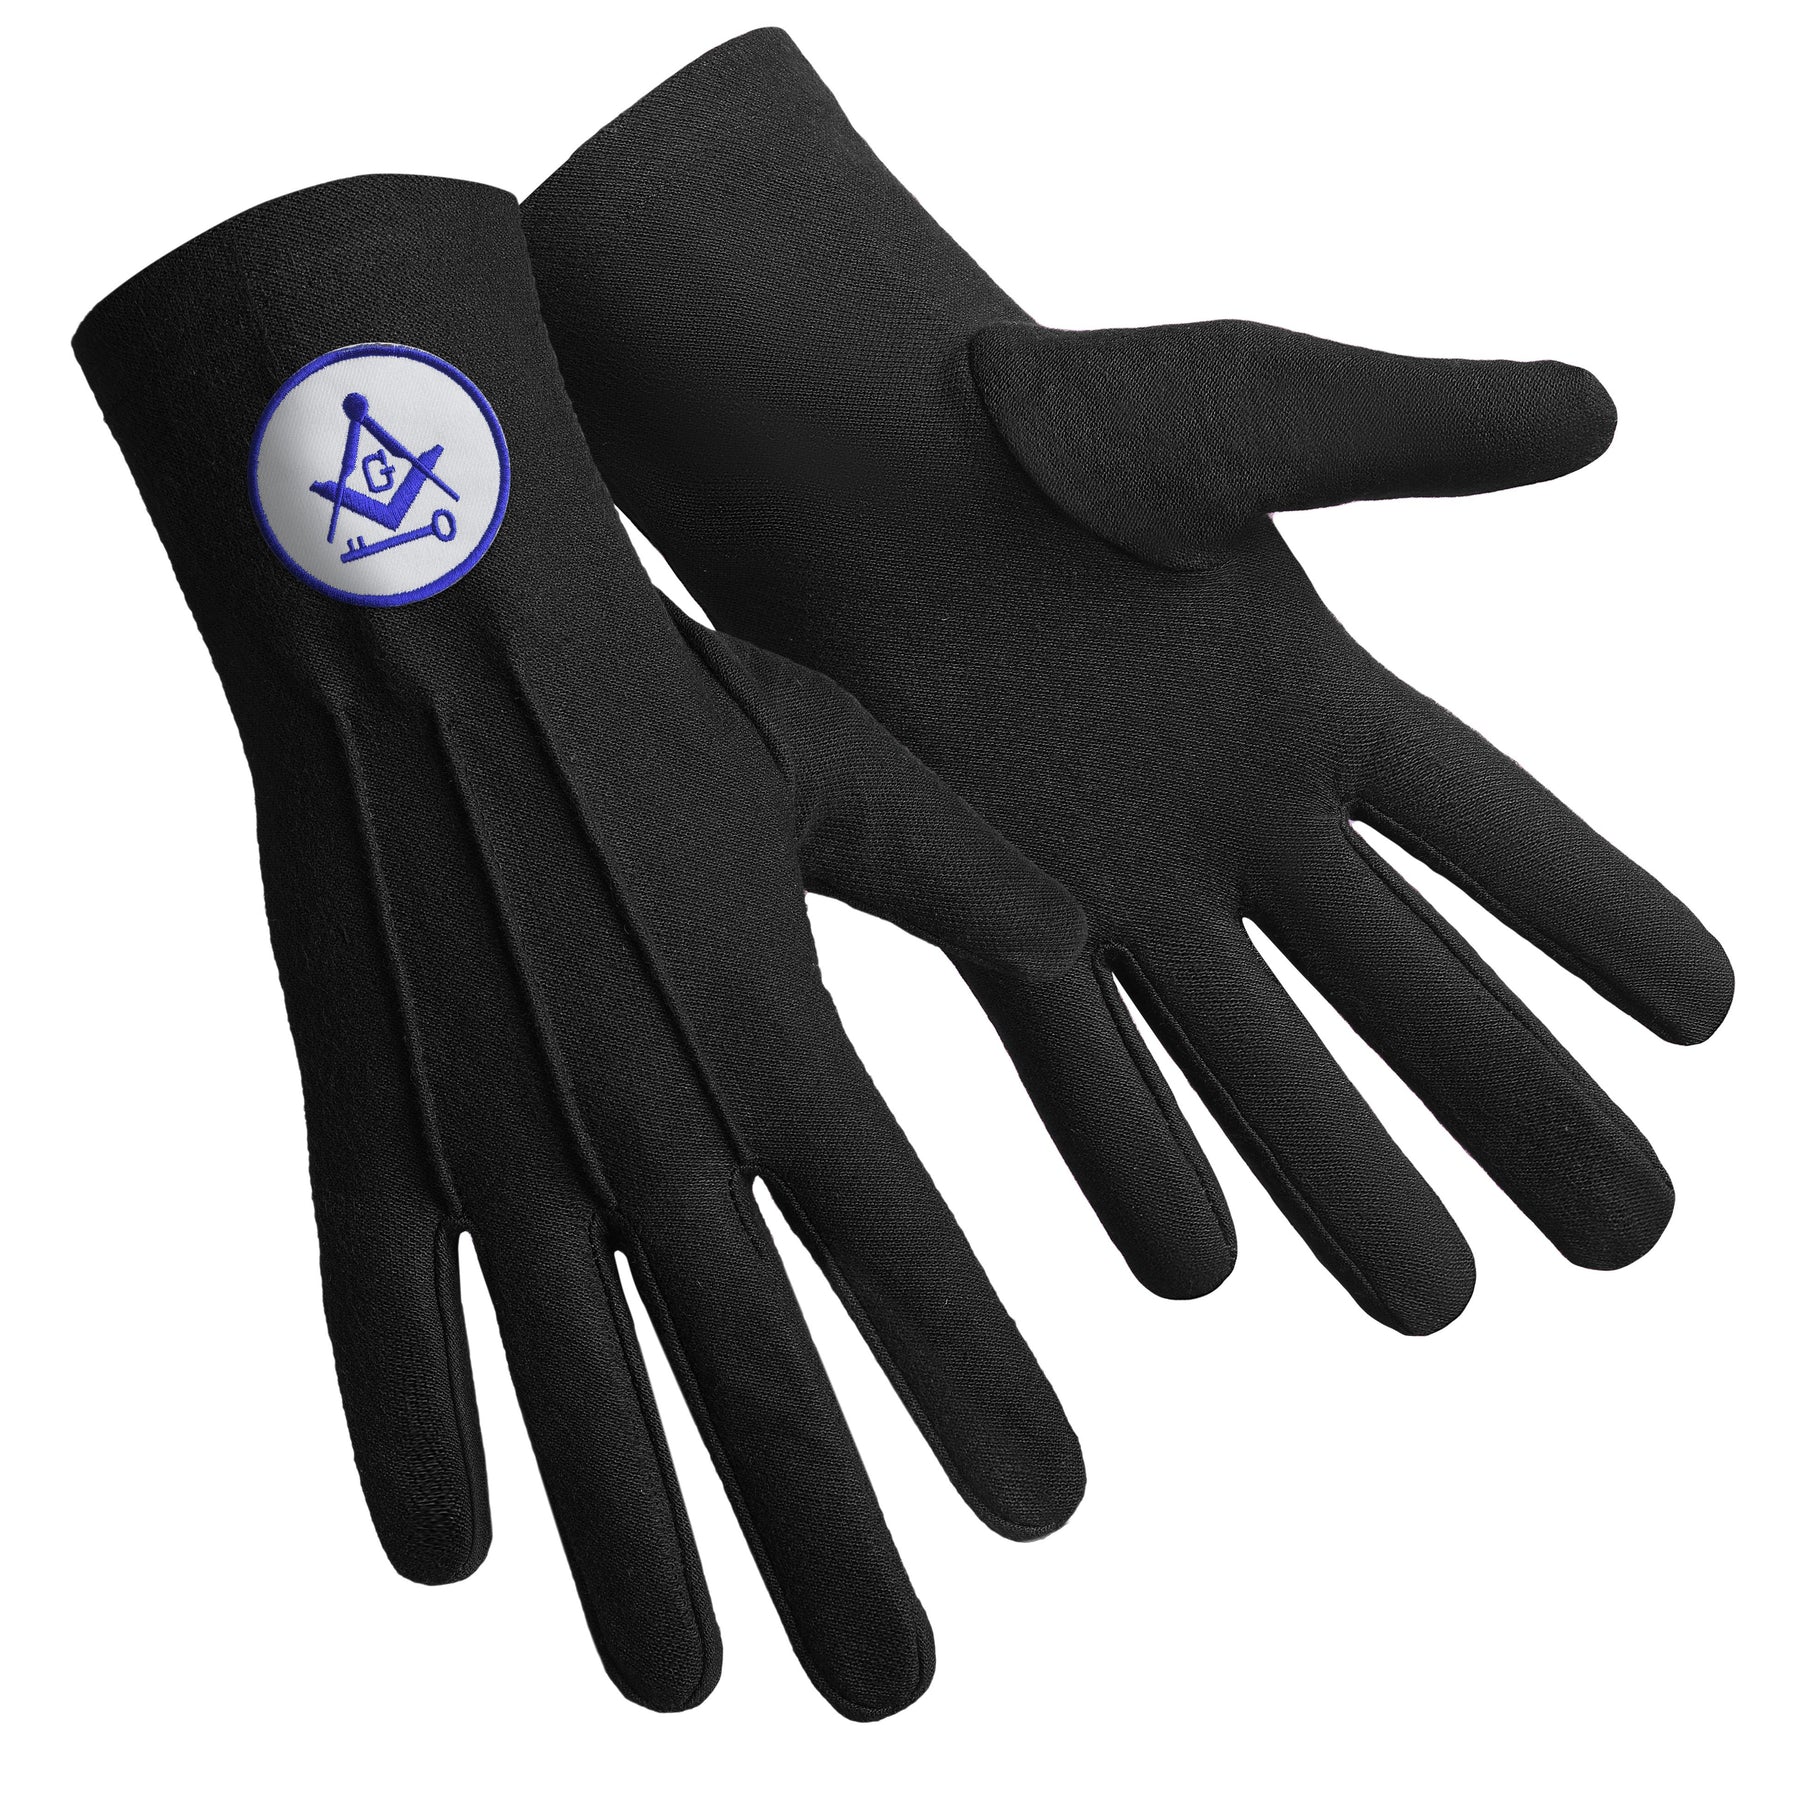 International Masons Glove - Black Cotton With Square And Compass G & Key - Bricks Masons